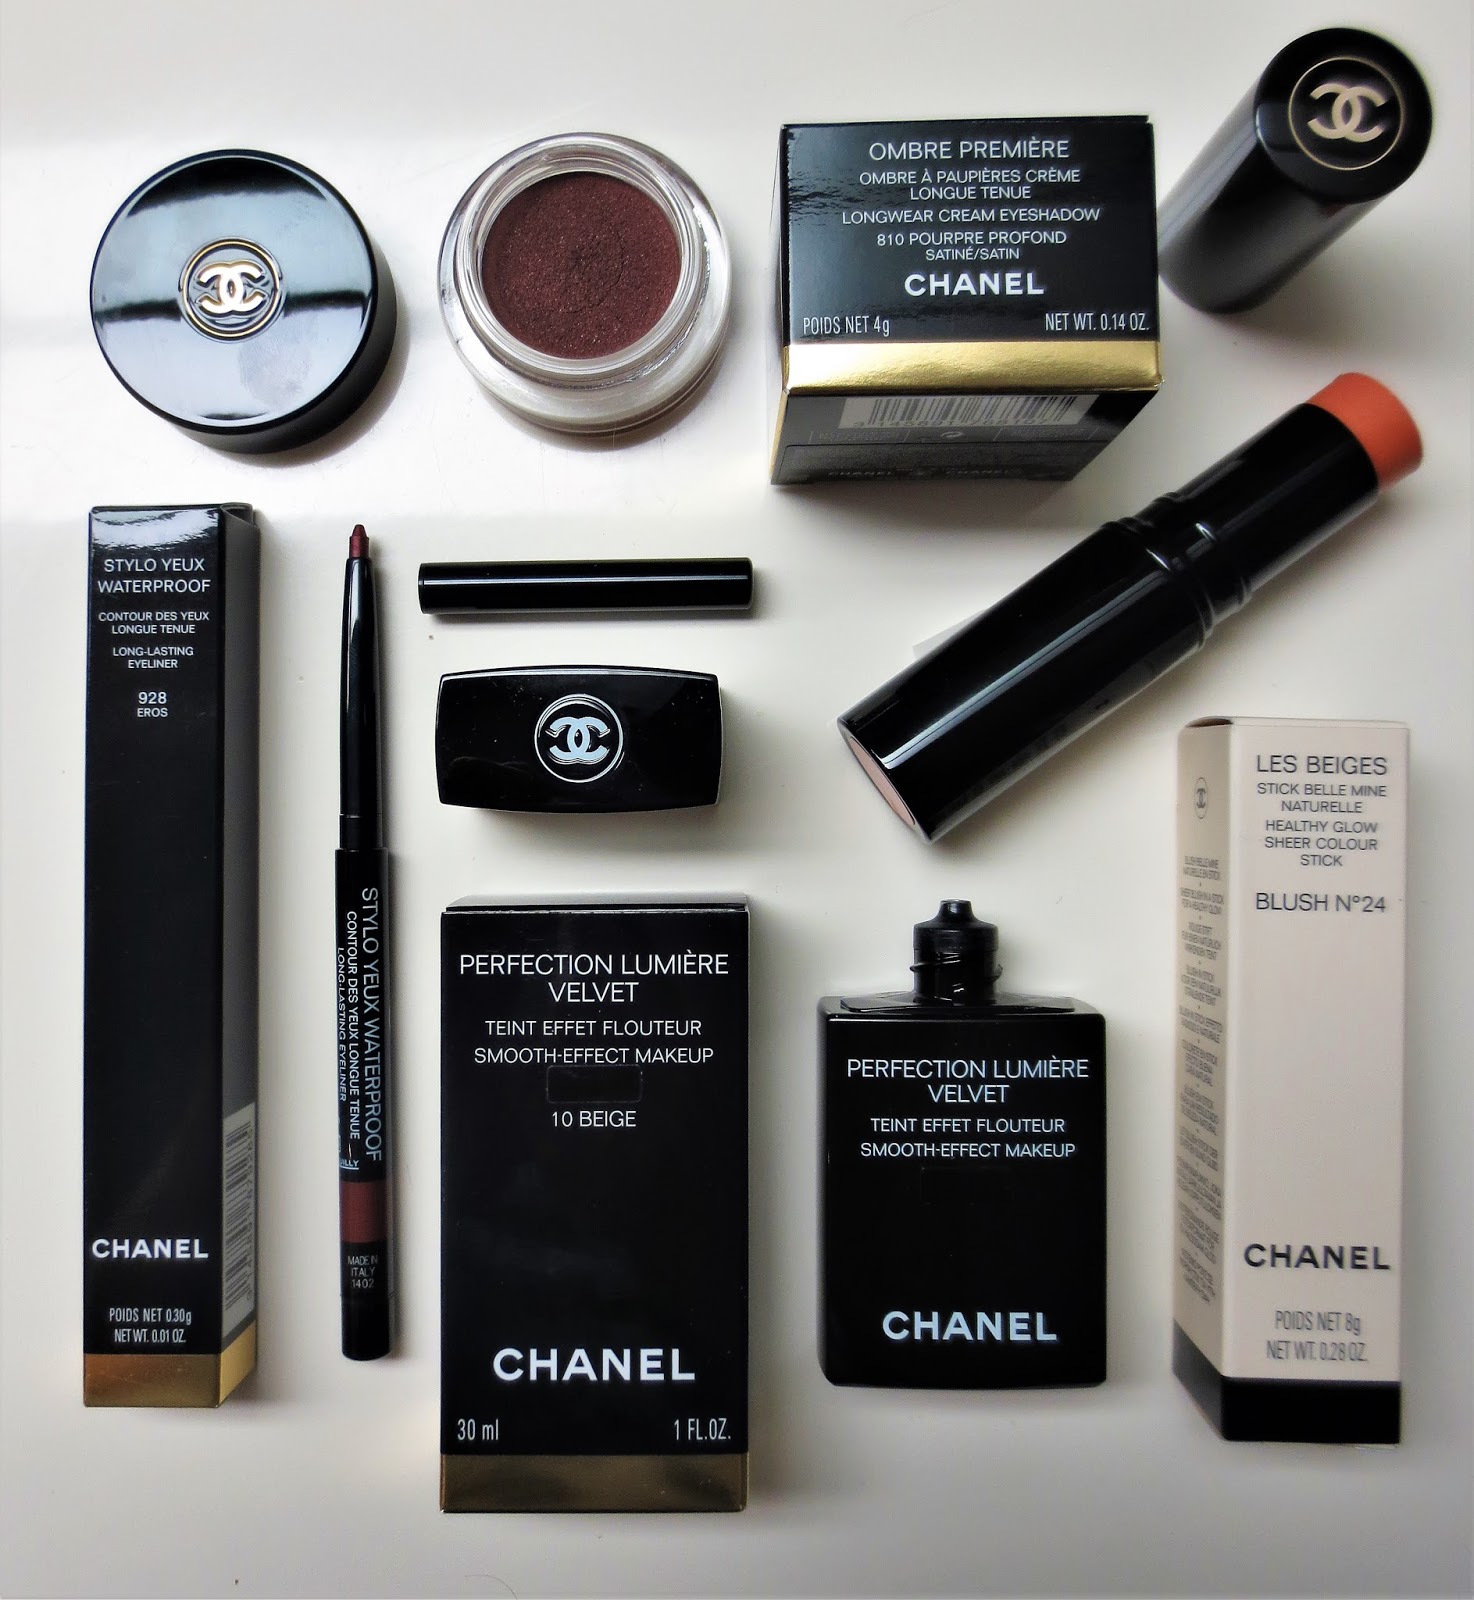 CHANEL, Makeup, Chanel Les Beiges Healthy Glow Sheer Colour Stick Blush  No 2 Sheer Bronze